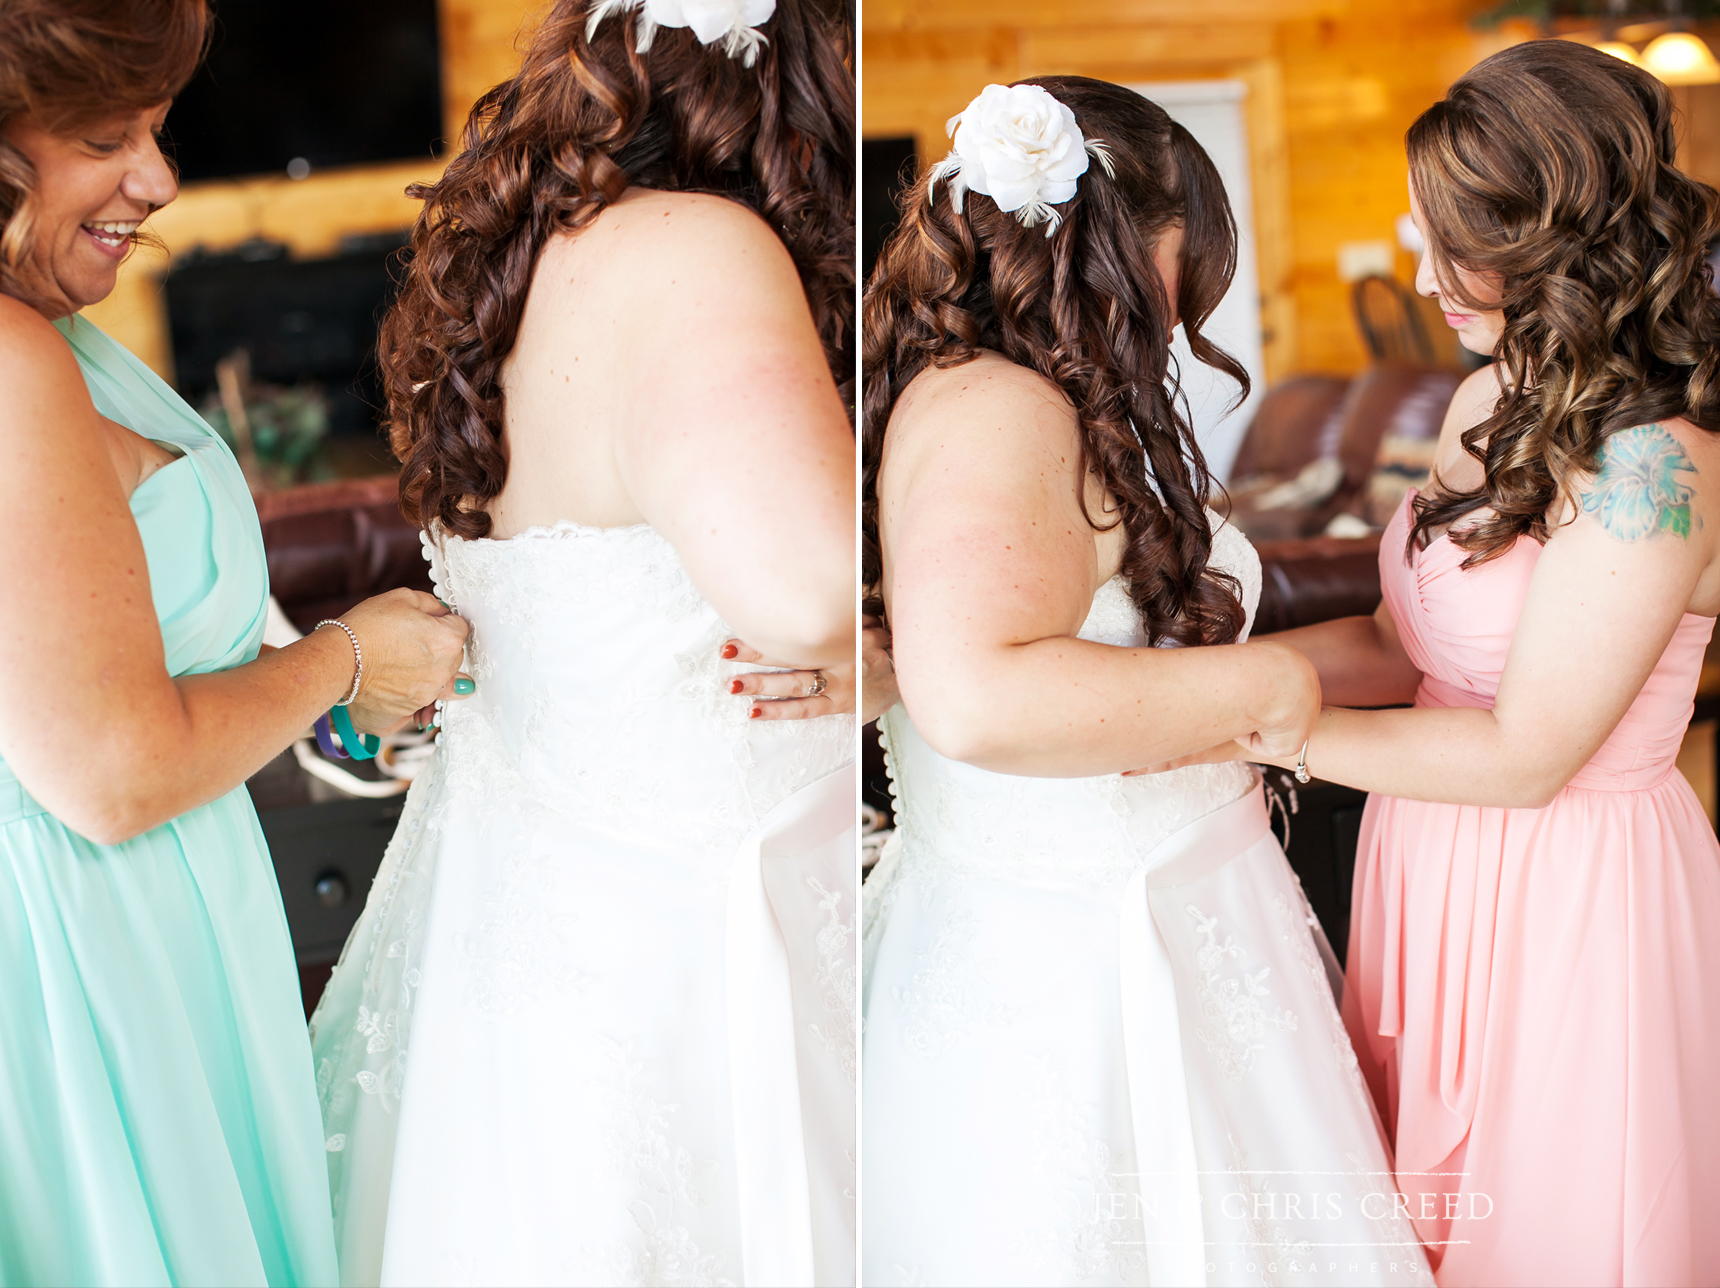 mom zipping bride's dress